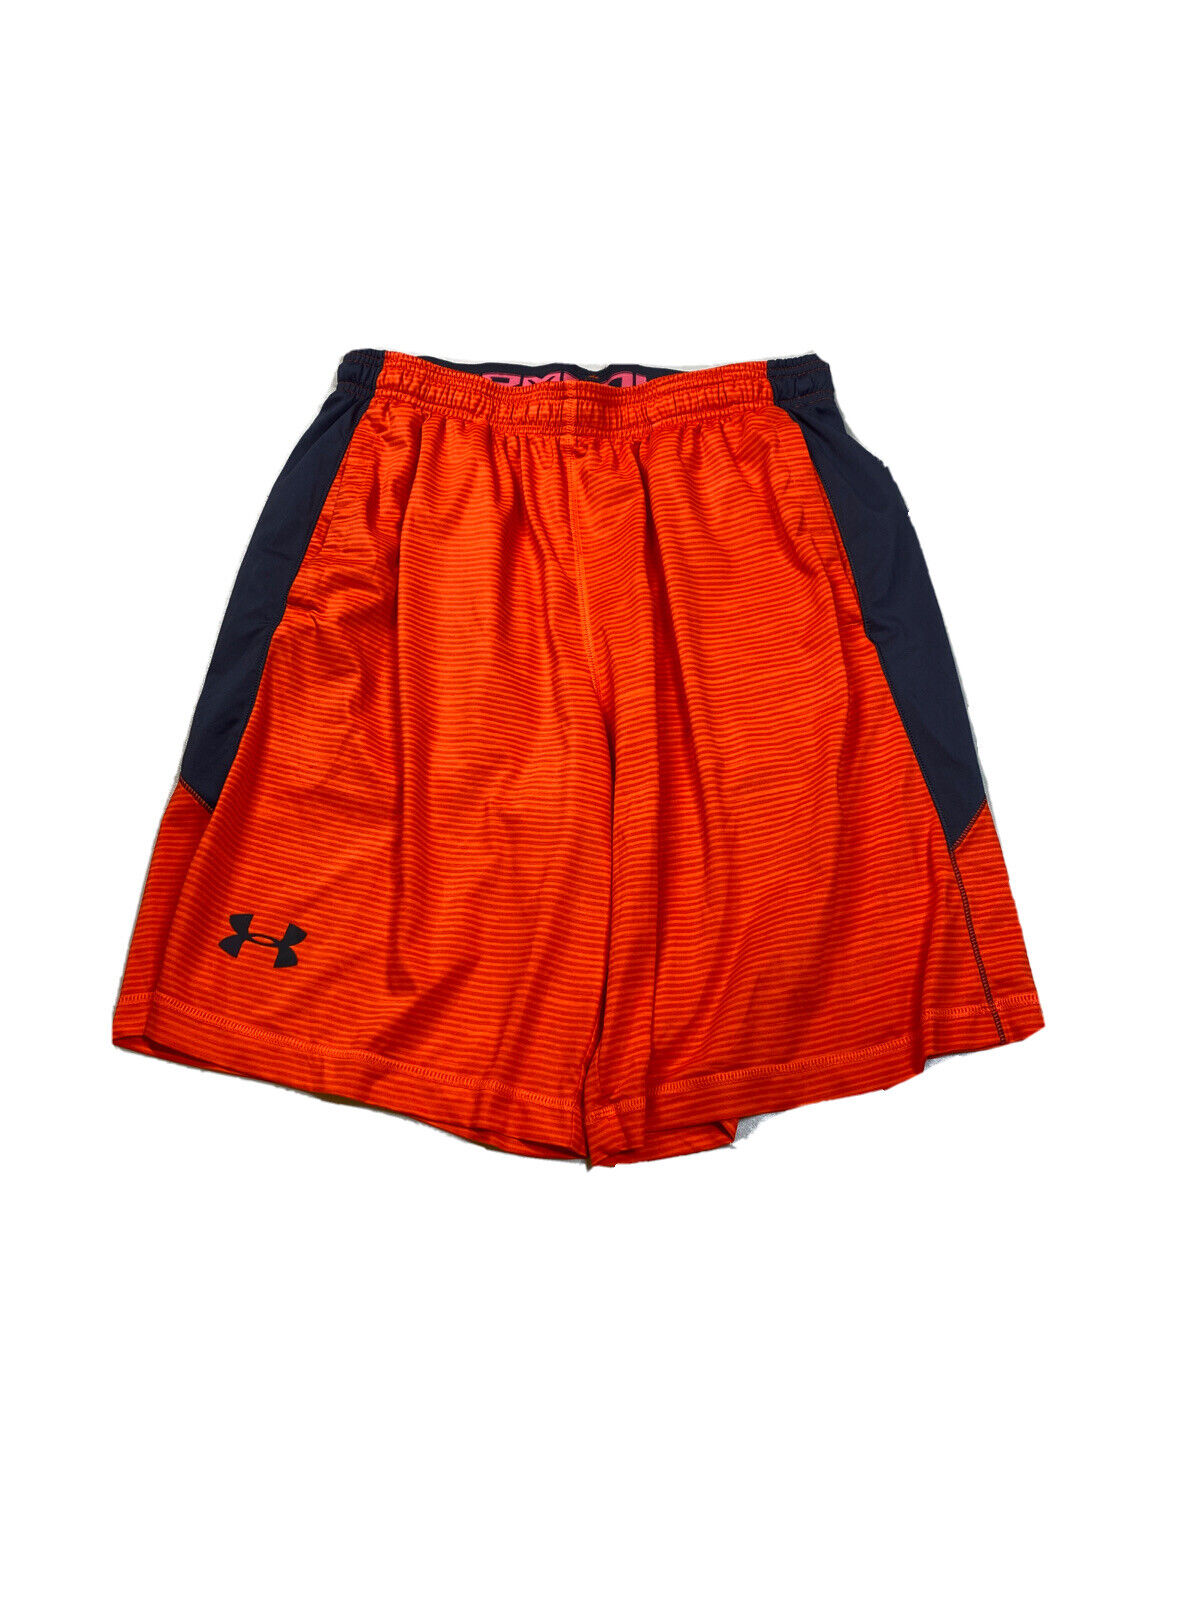 Under Armour Men's Orange Raid Loose Fit Athletic Shorts - L